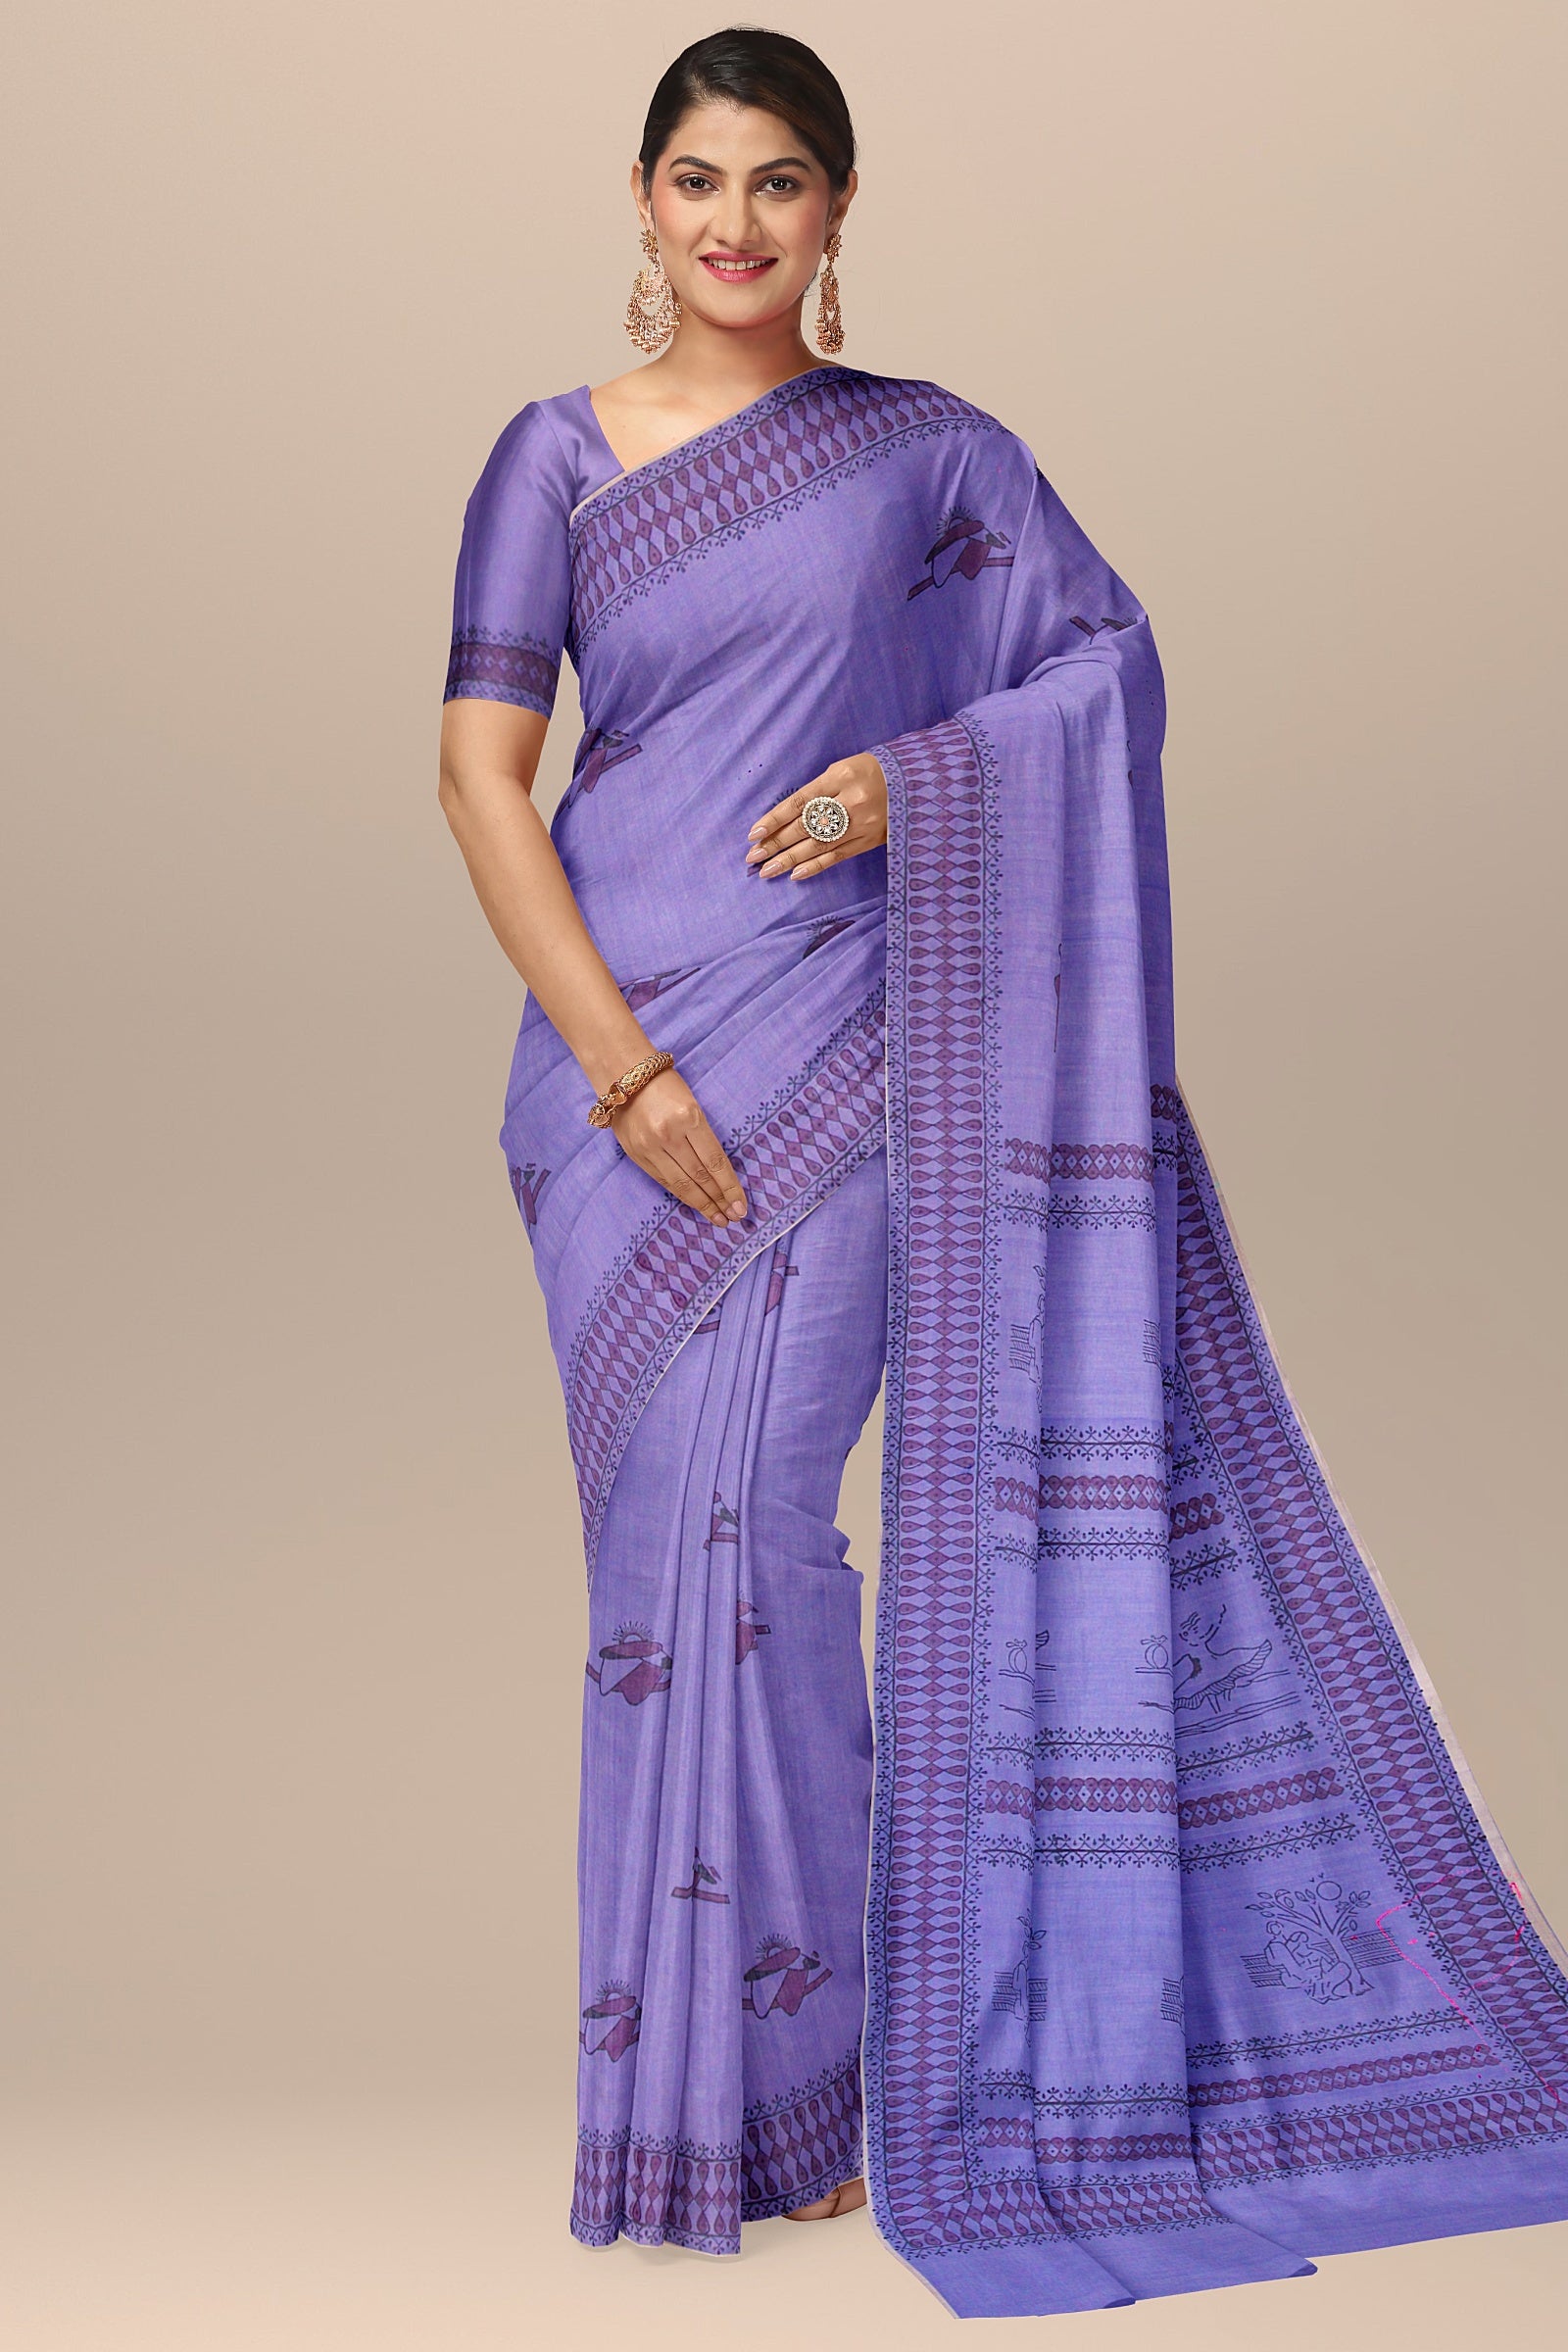 Limited Edition Artist Collection – Chhipa Hand Block Printed Light Purple Sauasr Silk Saree with Rohit’s Painting Motif SKU-7015 - Bhartiya Shilp